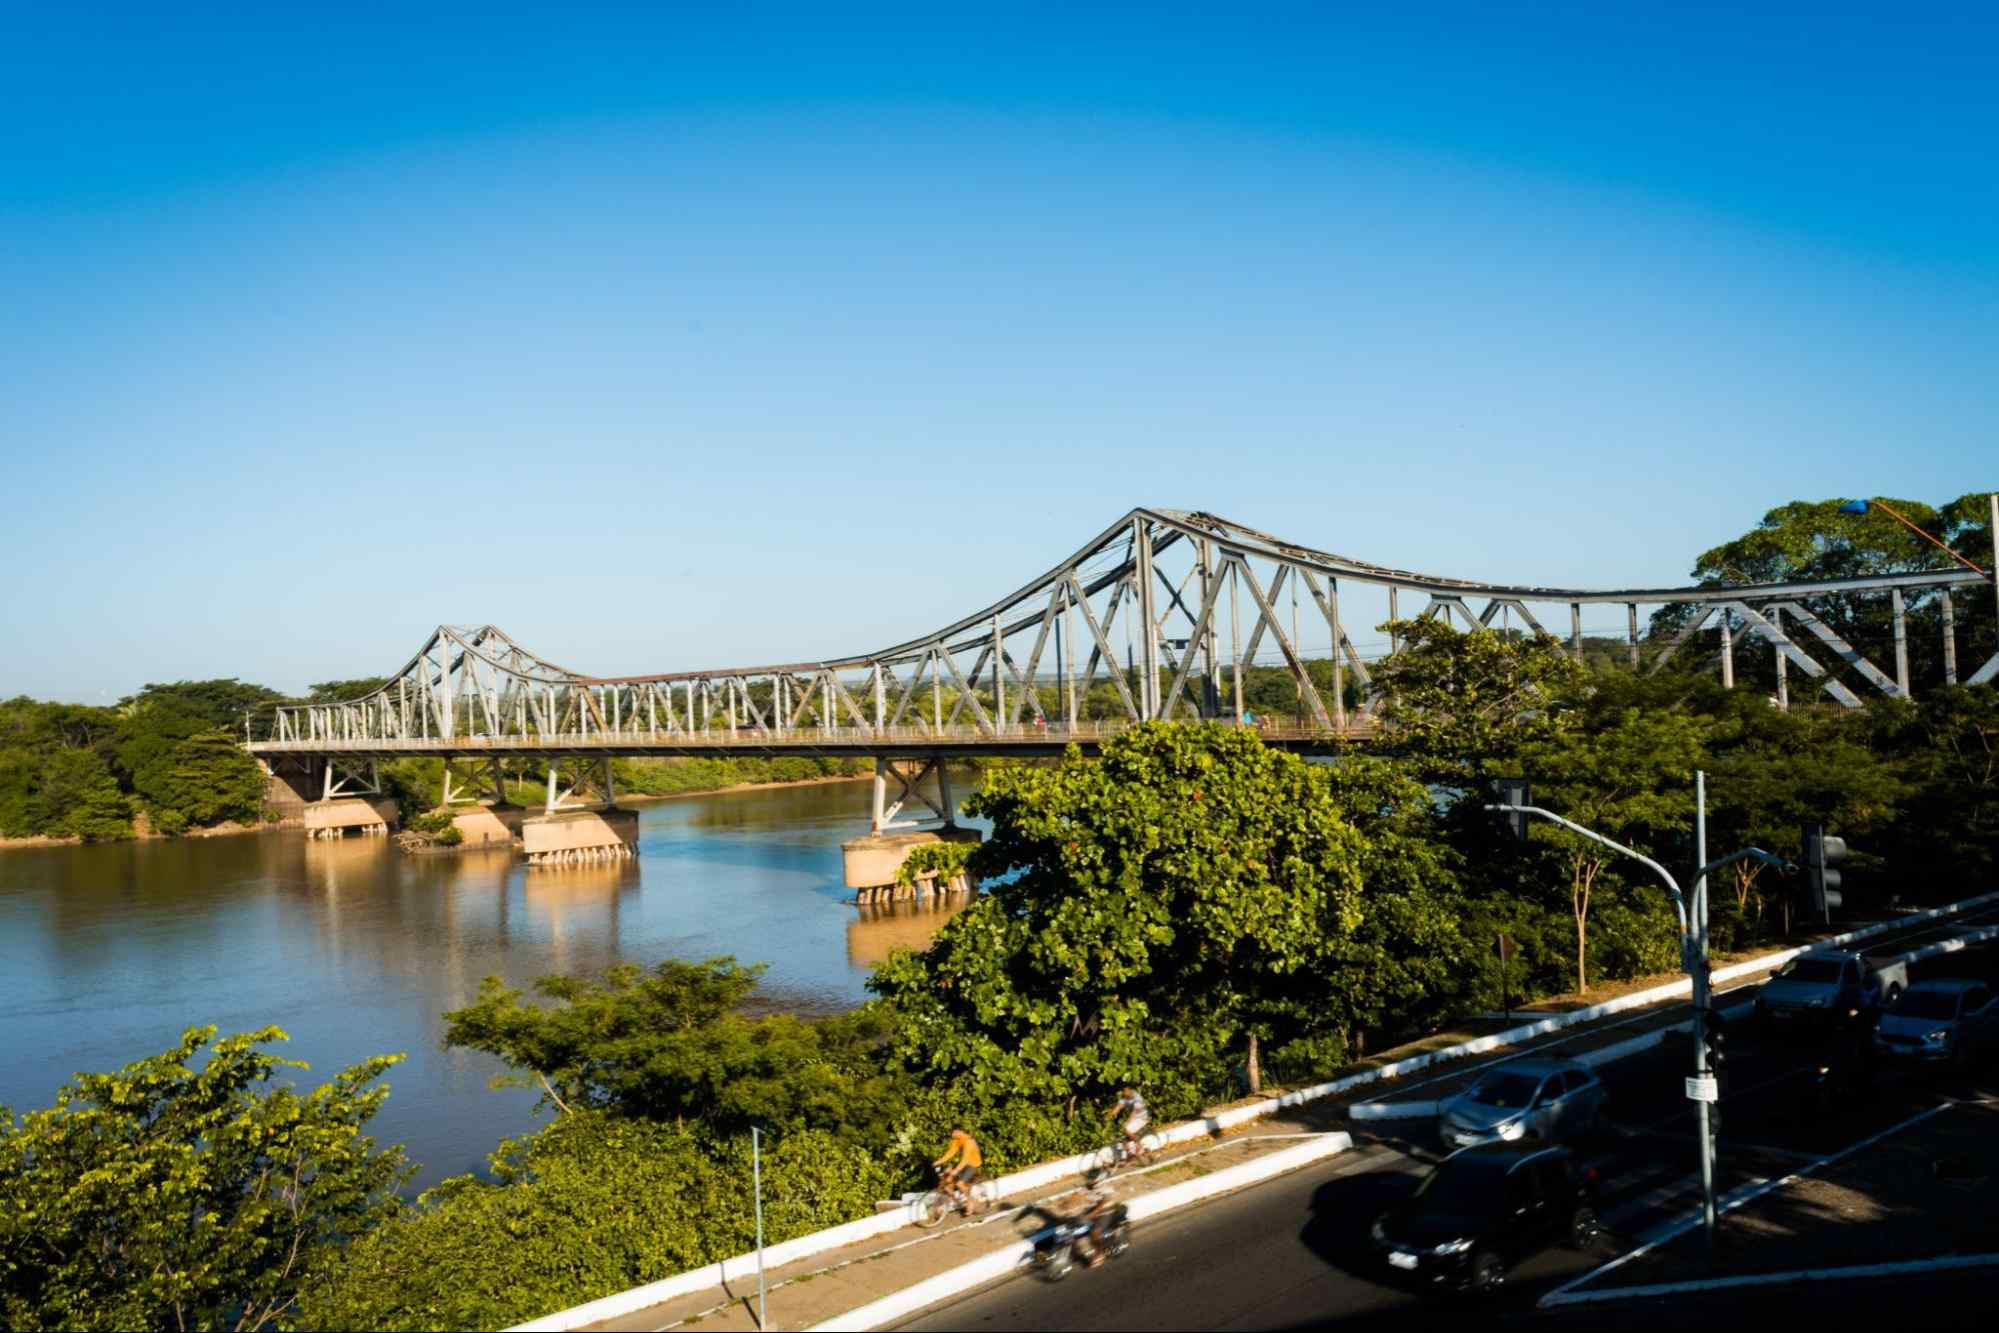 Foto de ponte que liga a cidade de Timon a Teresina. Dia ensolarado, céu azul e limpo.